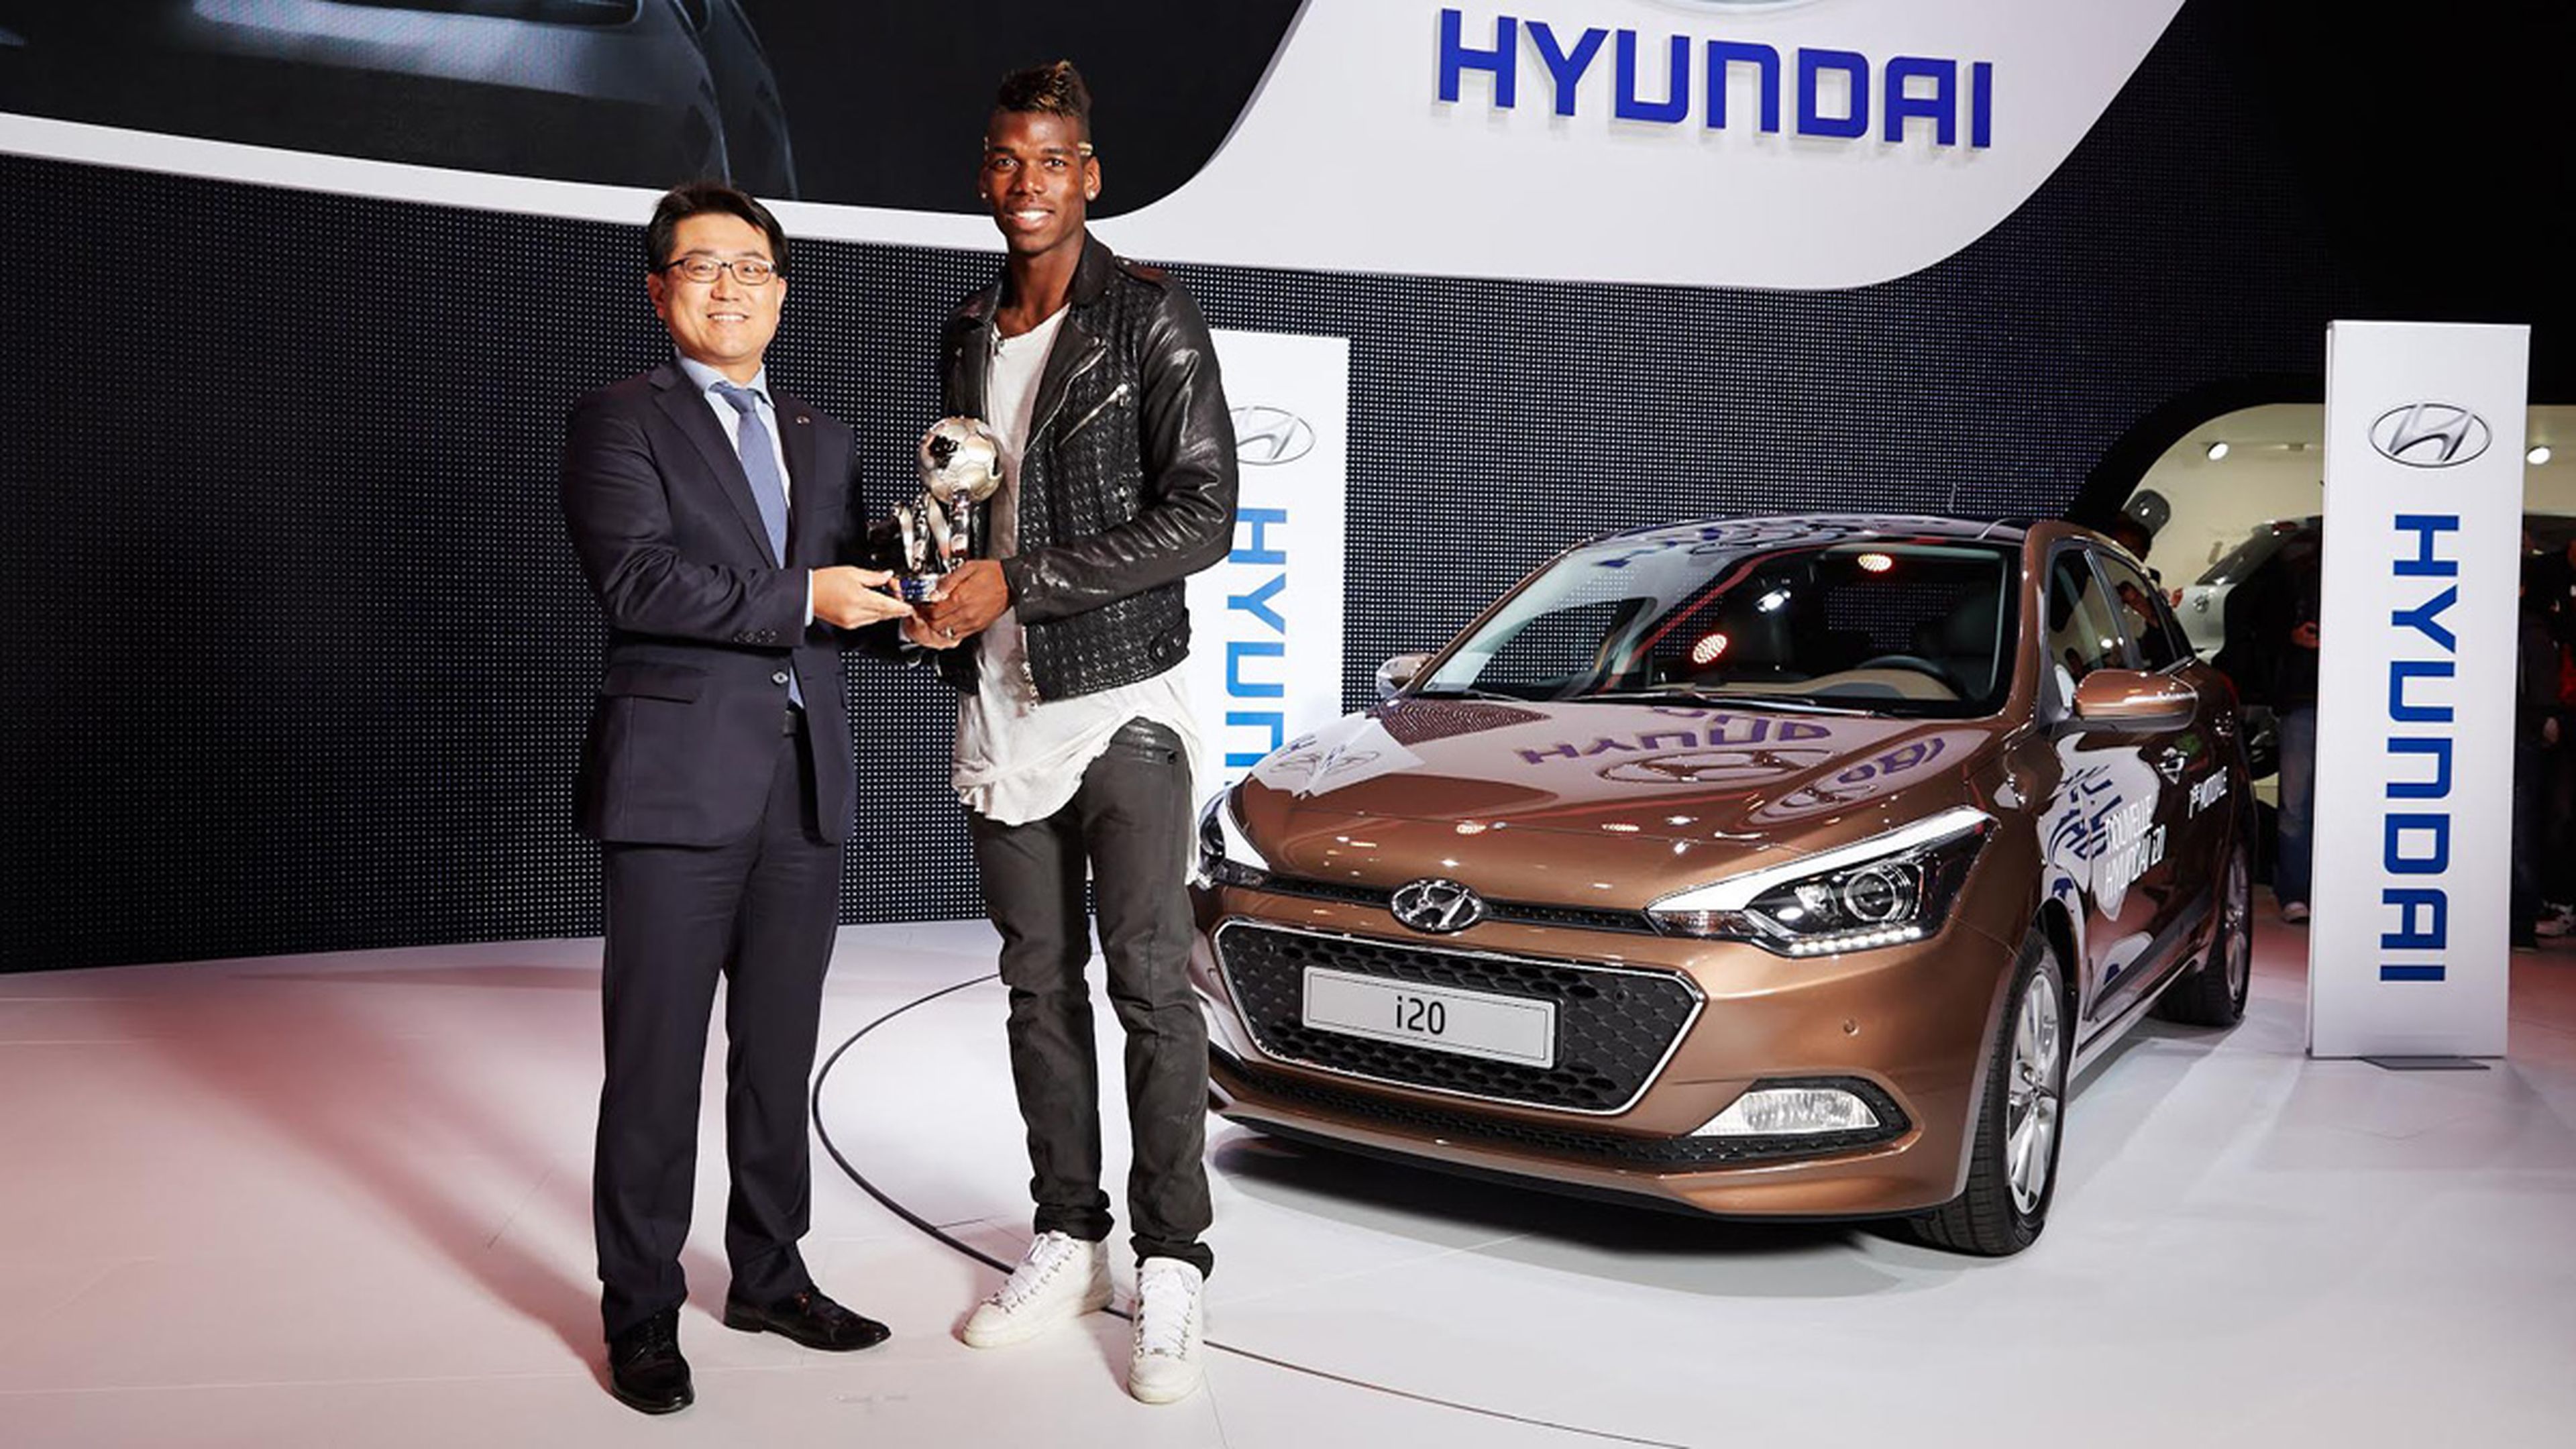 Hyundai corona a Pogba como mejor jugador joven del Mundial